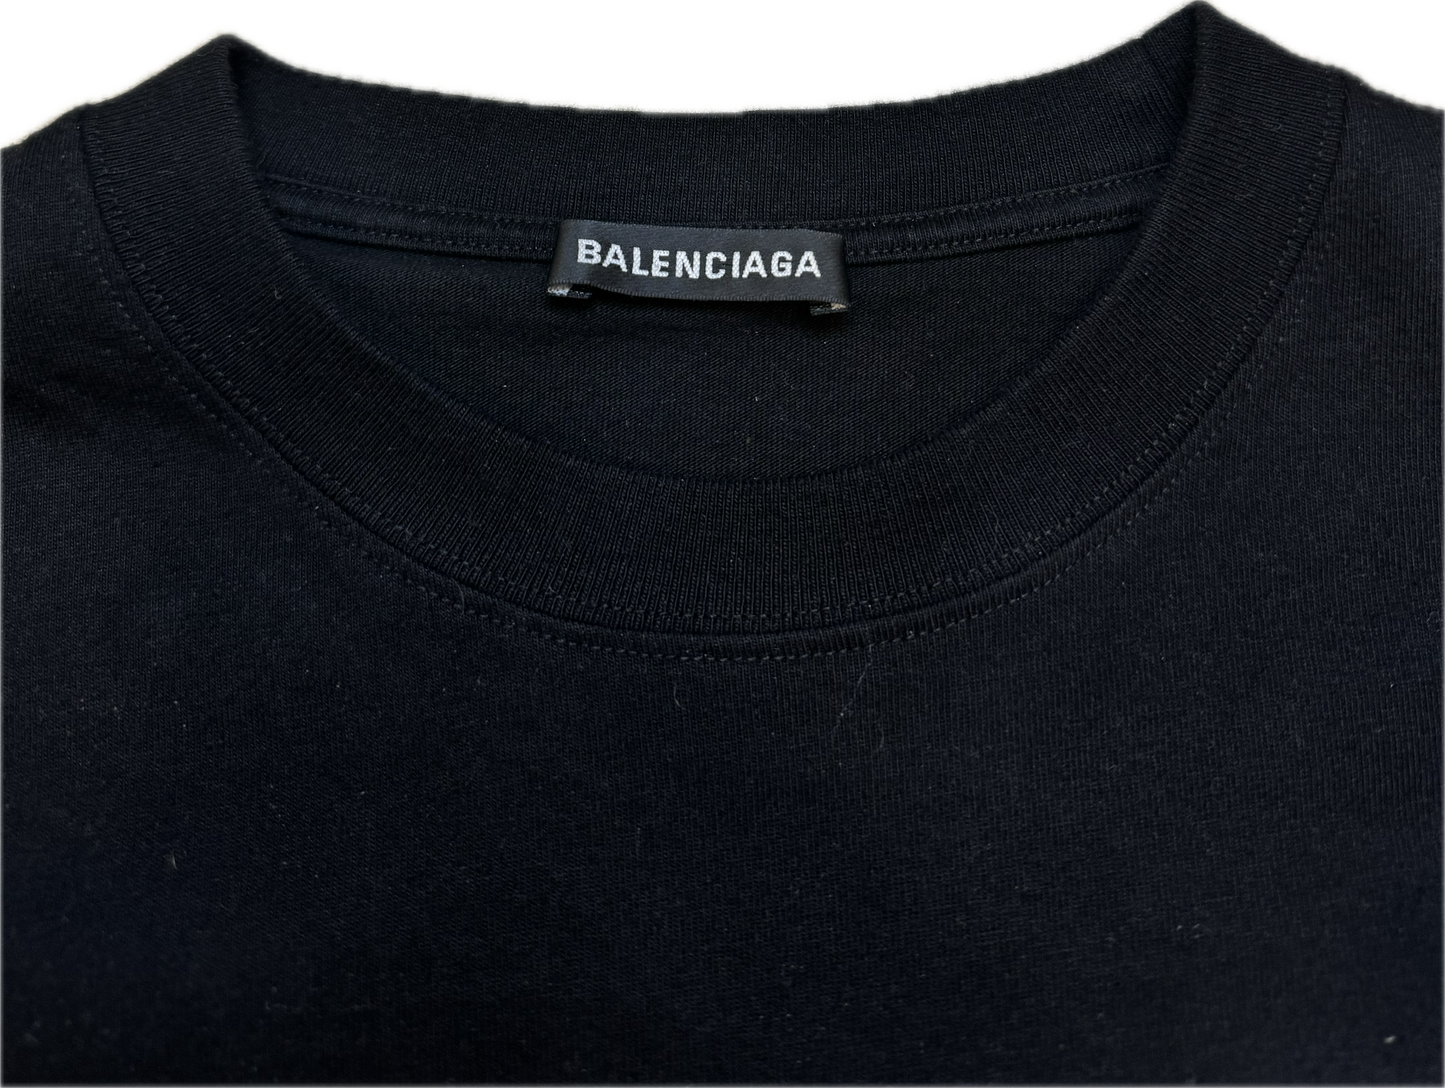 Balenciaga World Food Programme Long Sleeve T Shirt